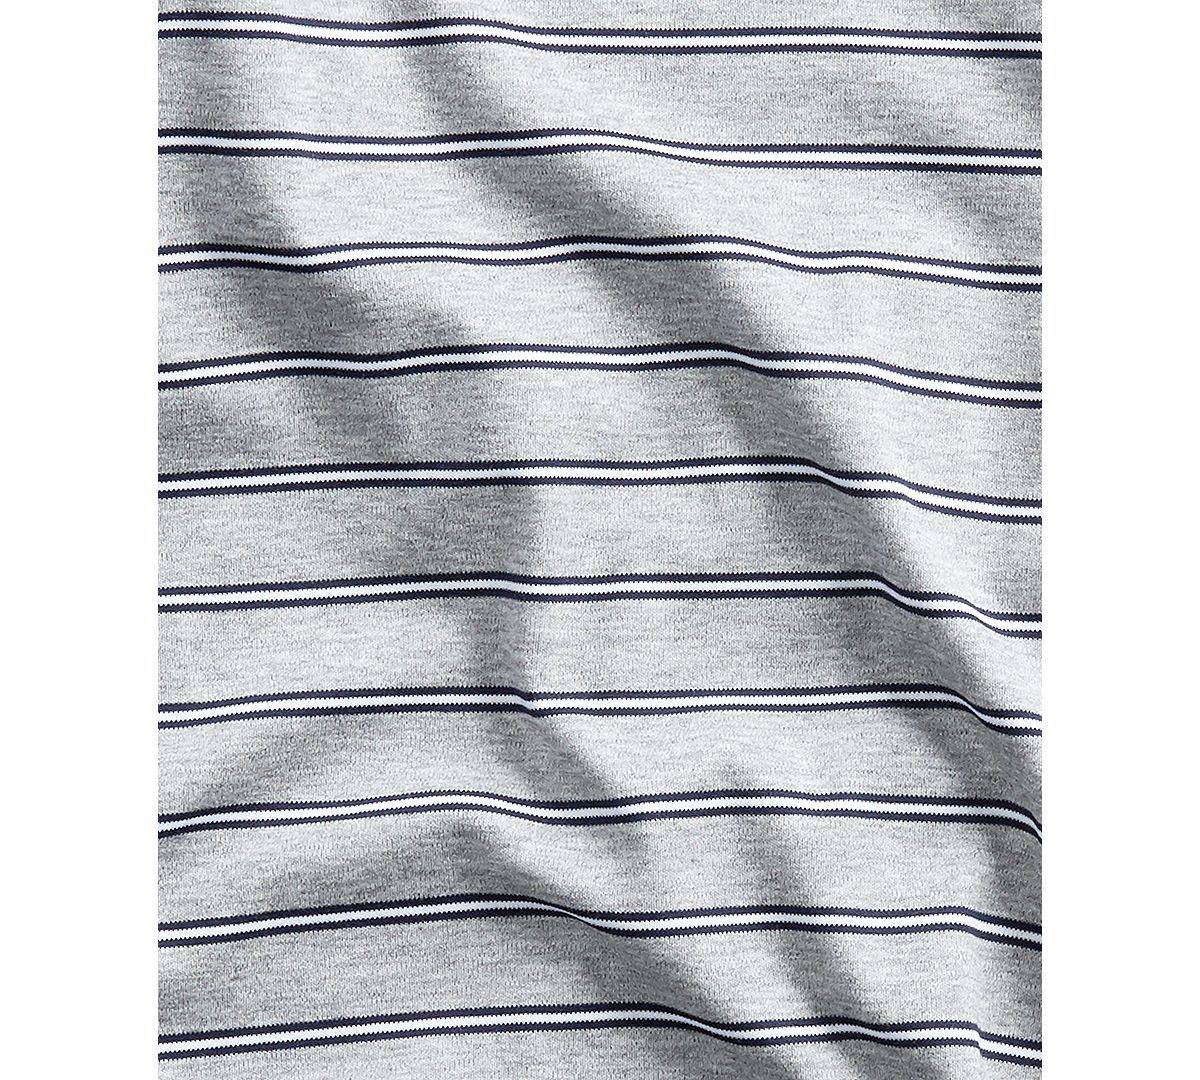 Polo Ralph Lauren Classic Fit Stripe Polo Shirt Andover Heather Multi